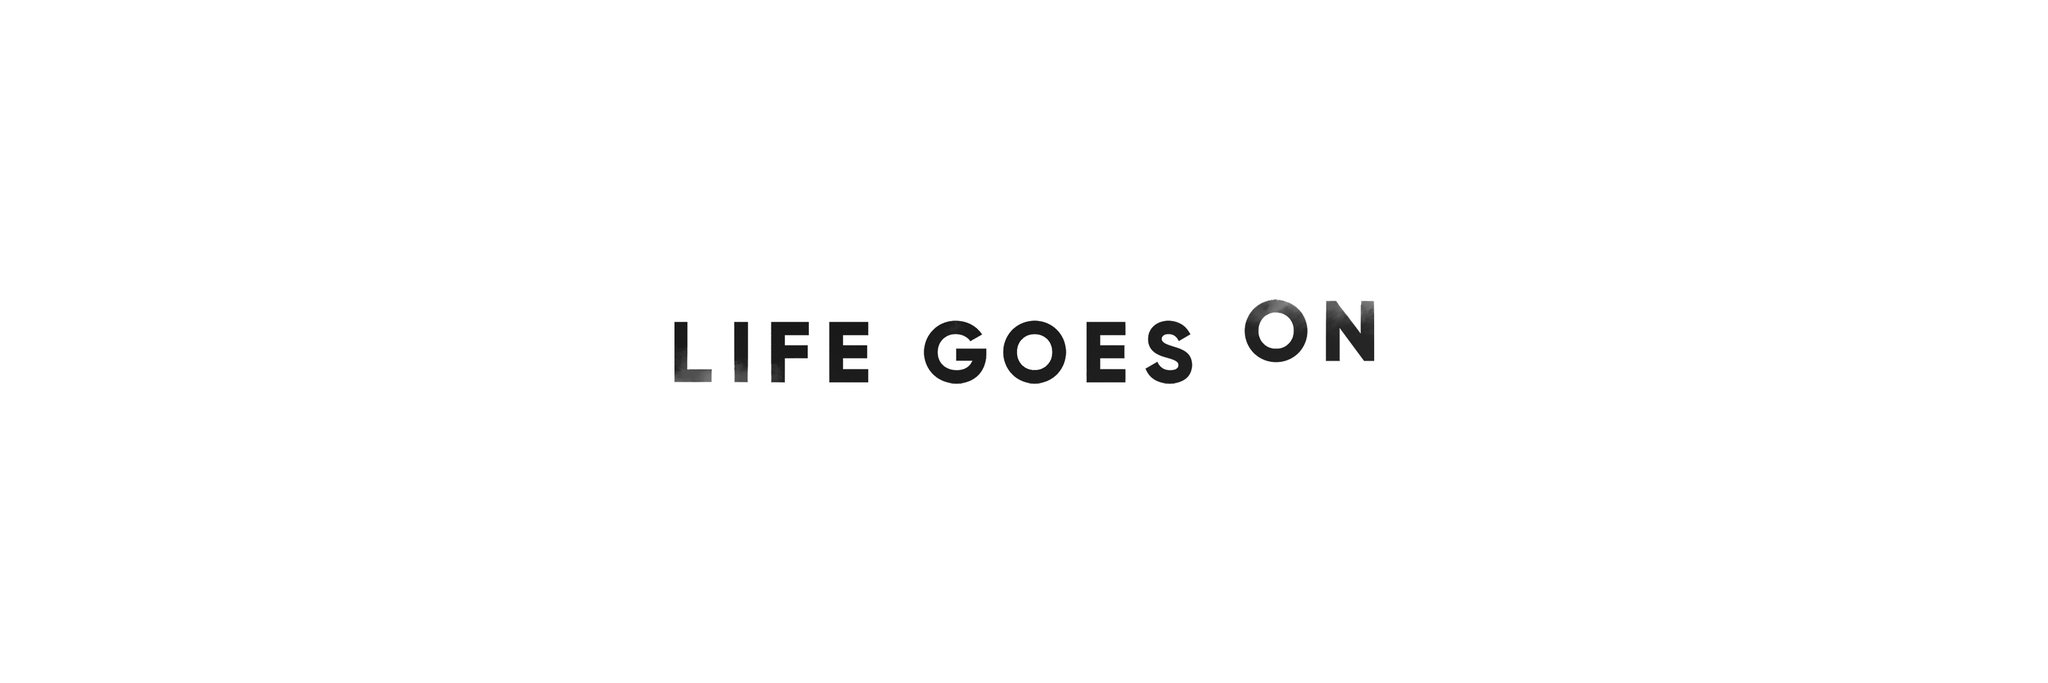 Life goes на русском. Лайф Гоес он. Life goes on BTS надпись. Life goes on надпись. Life goes on BTS logo.